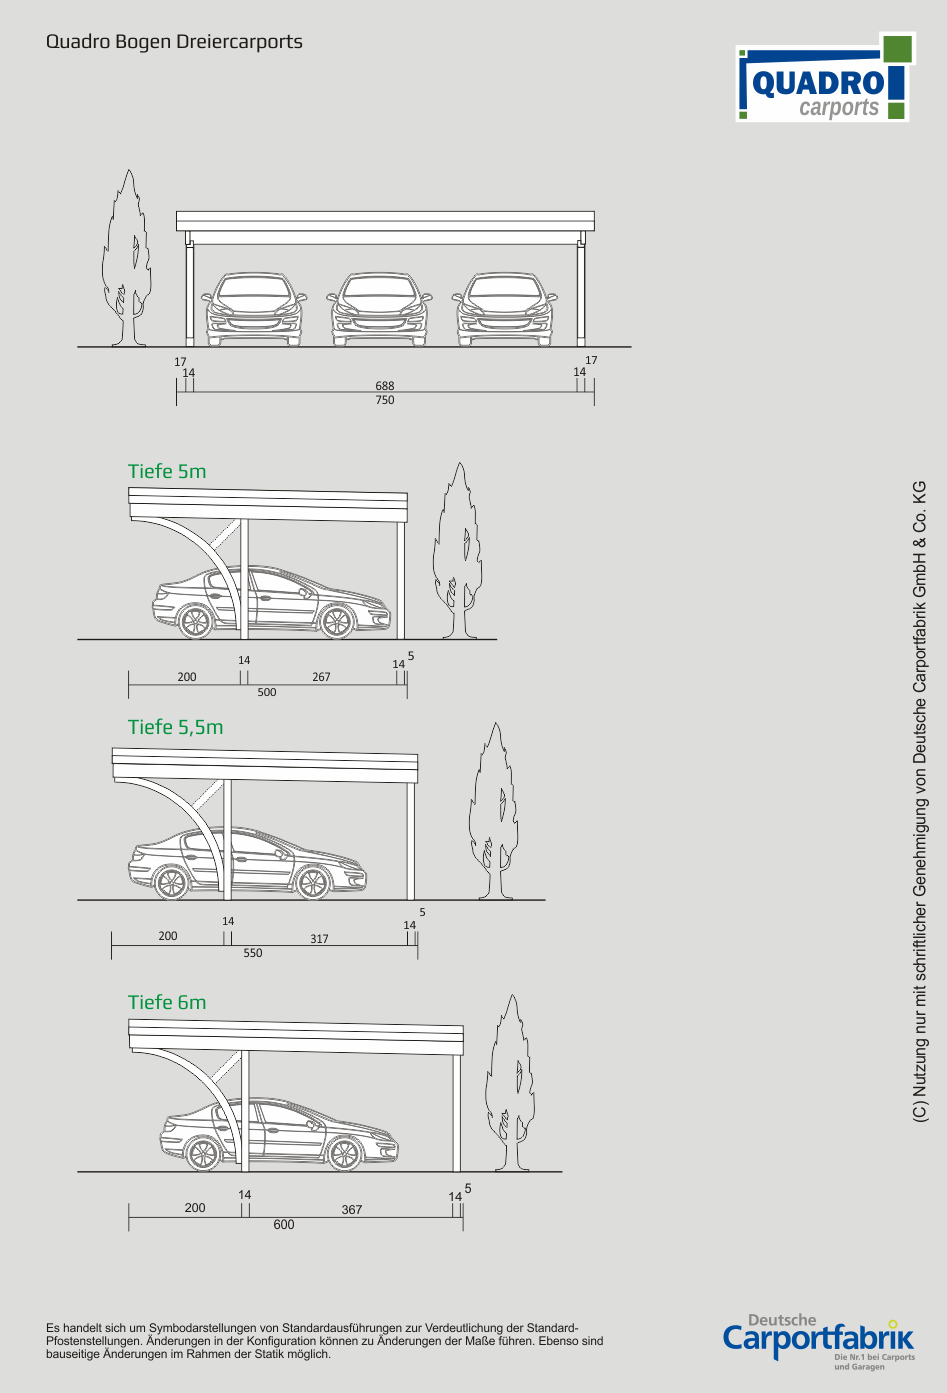 Technische Ansichten QUADRO-Bogen-Carports - Dreiercarport